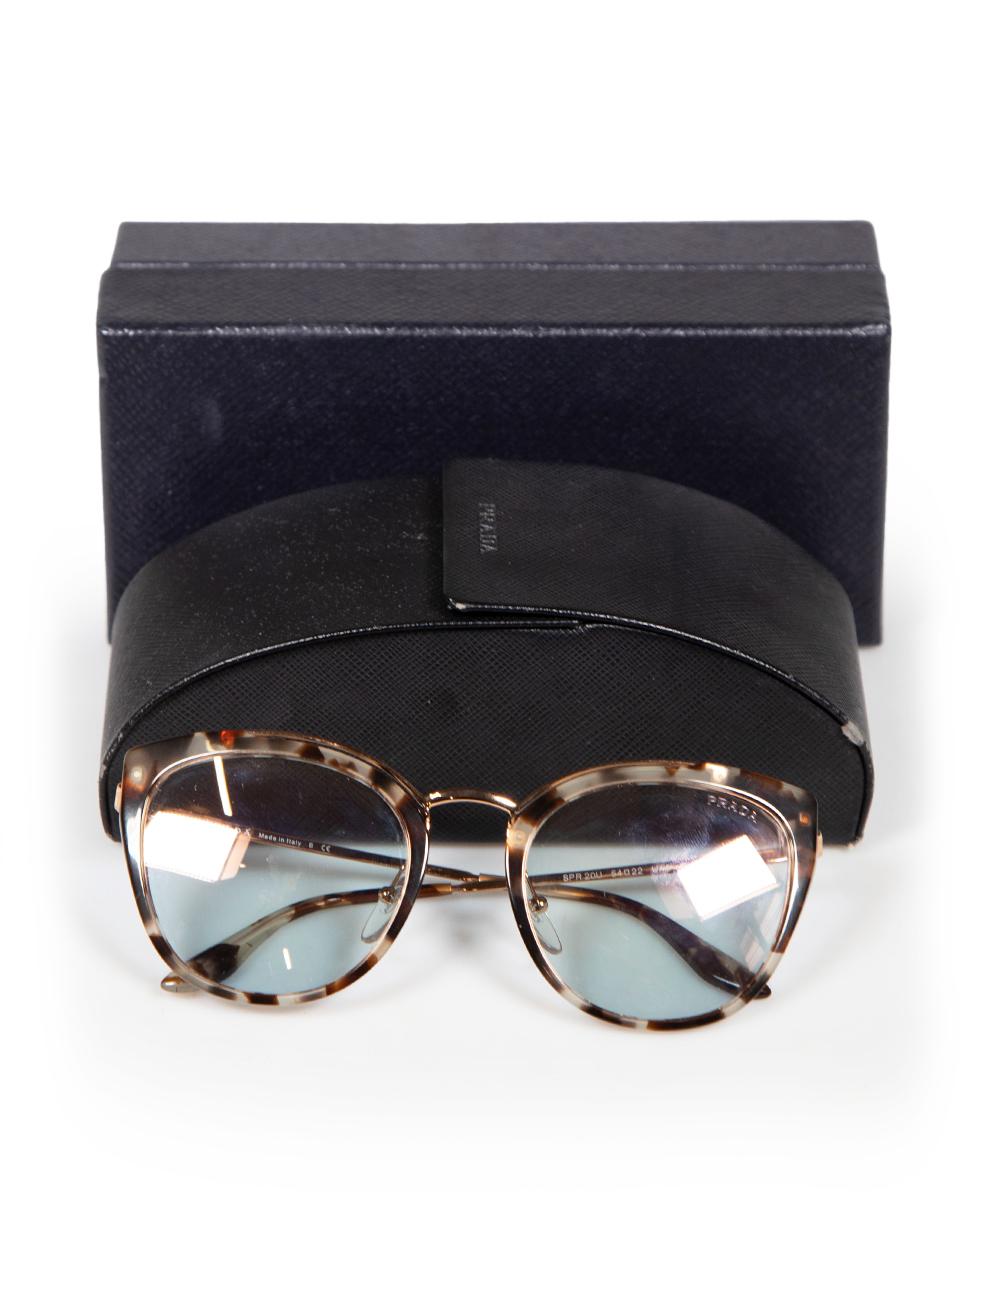 Prada Brown Tortoiseshell SPR 20U Cat Eye Sunglasses For Sale 1